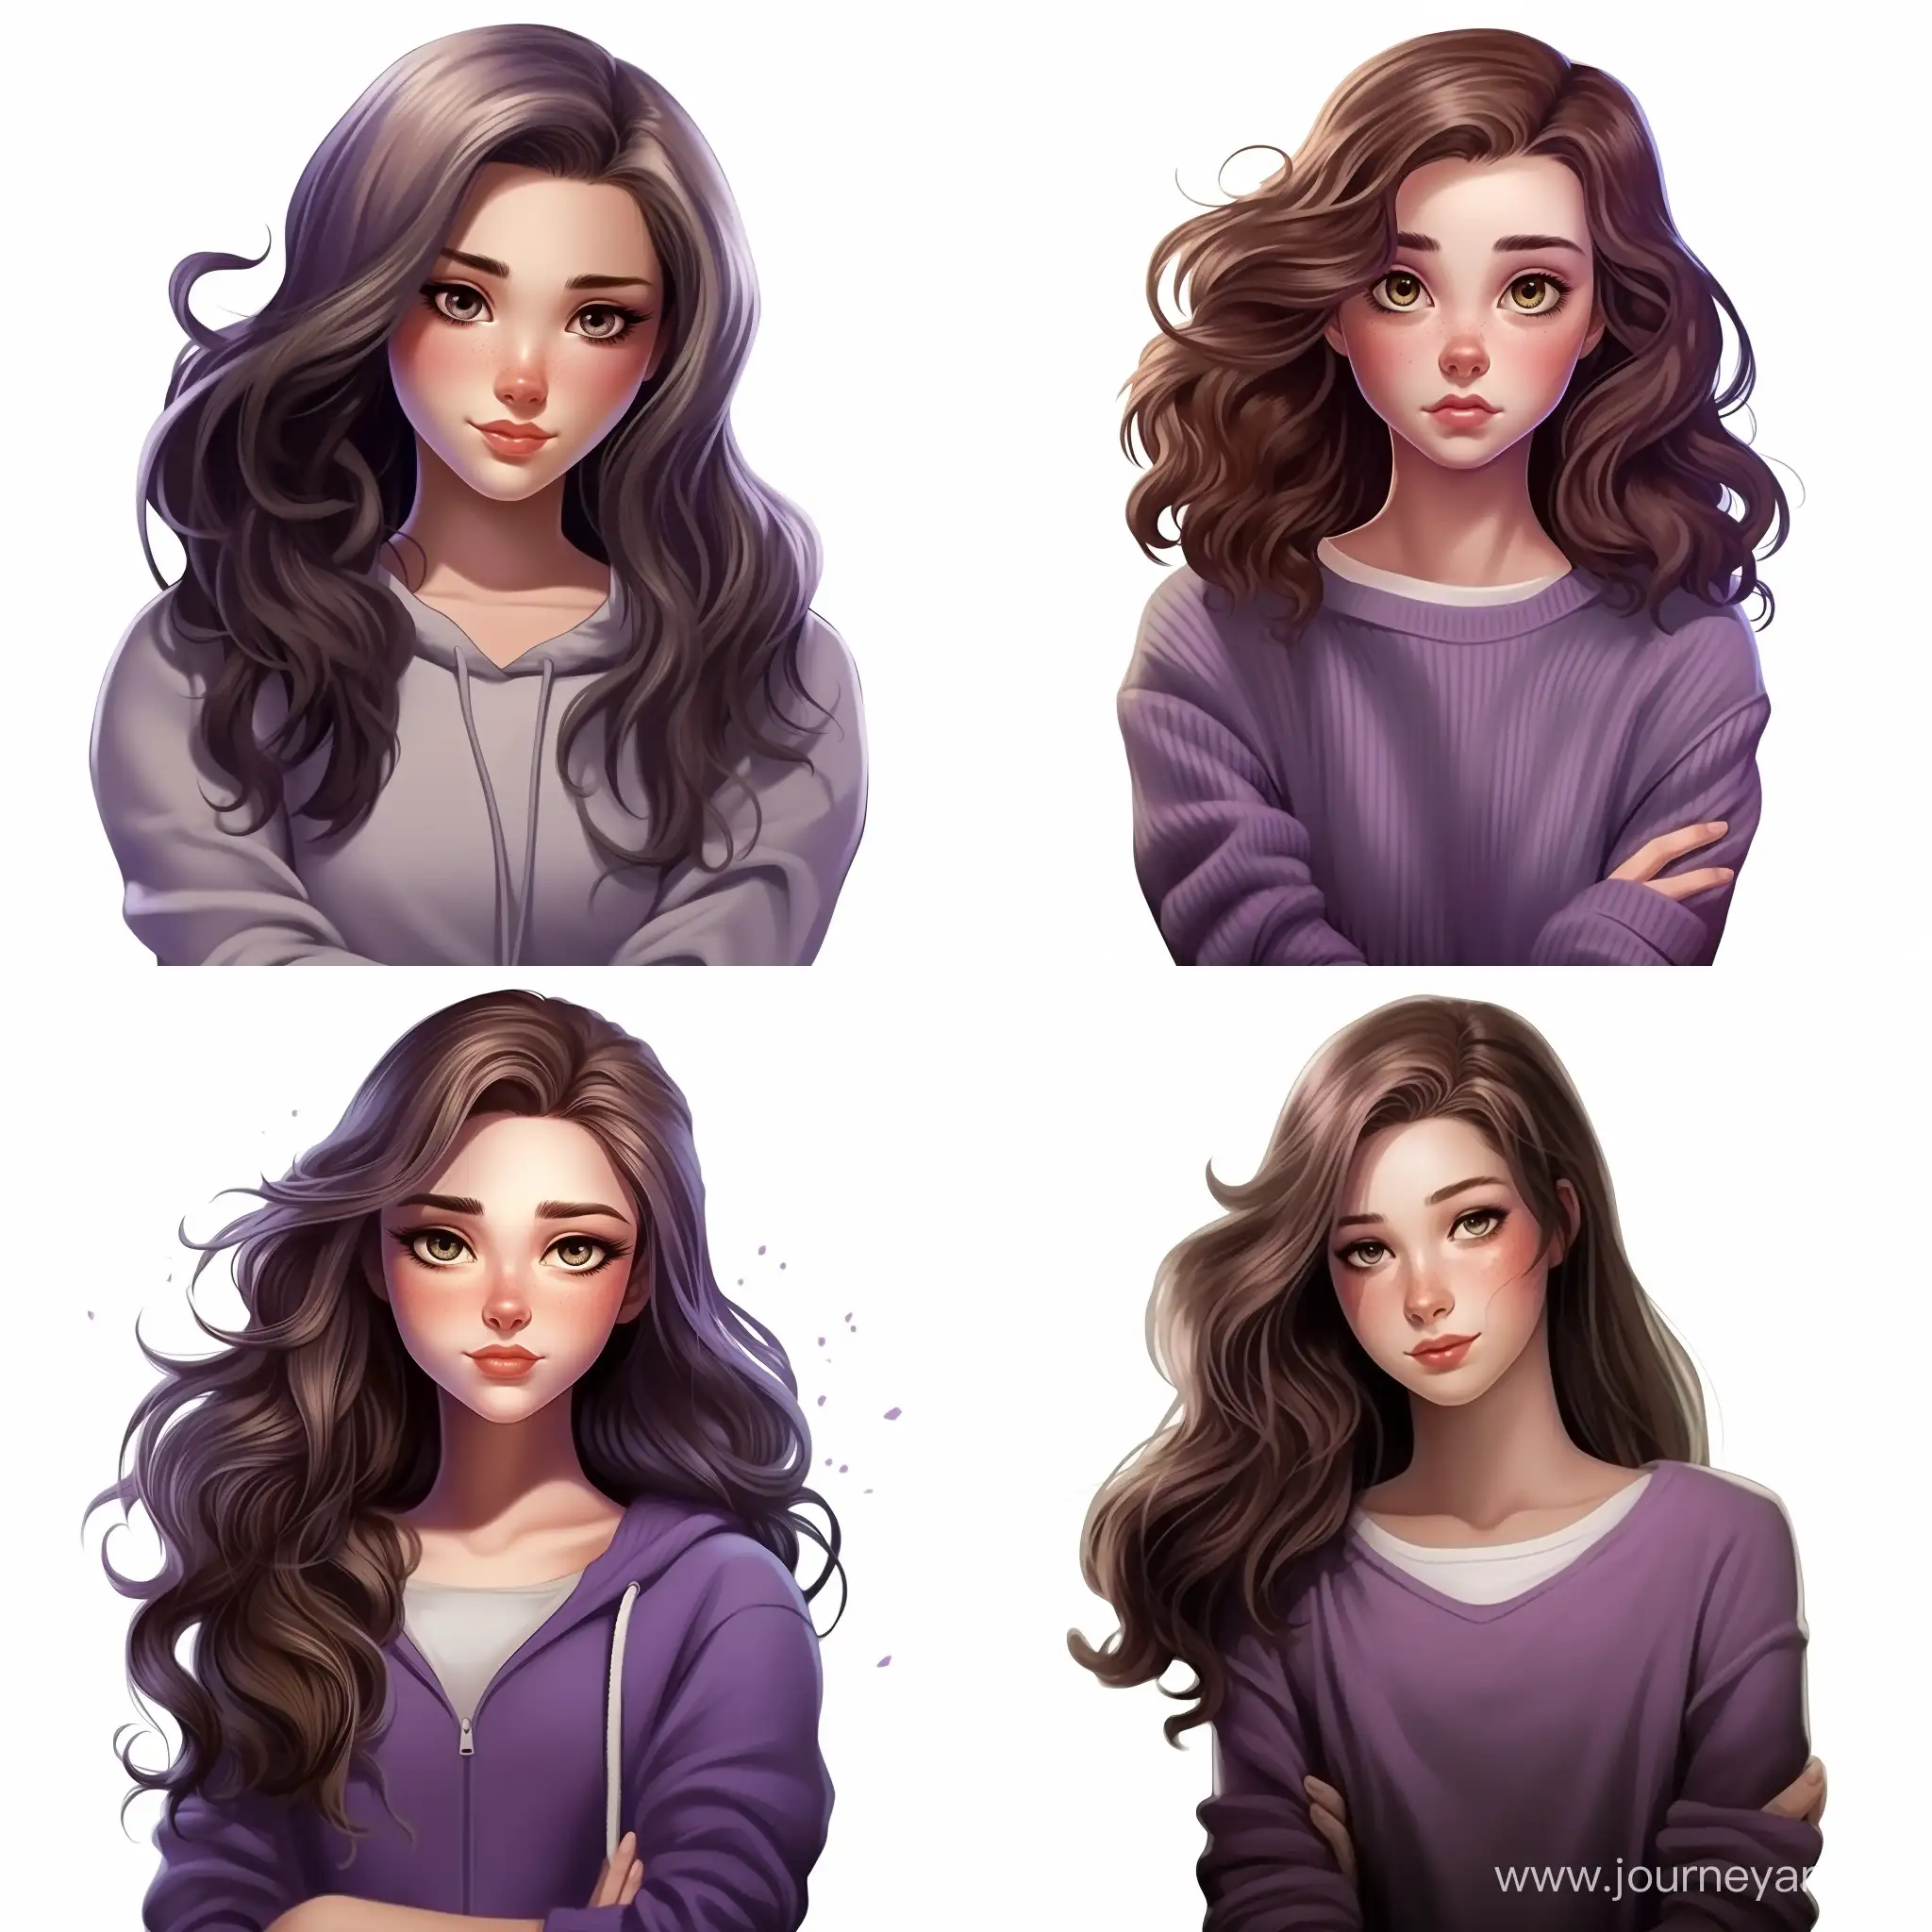 Stylish-Teenage-Cartoon-Character-in-Purple-Sweatshirt-and-Pleated-Skirt